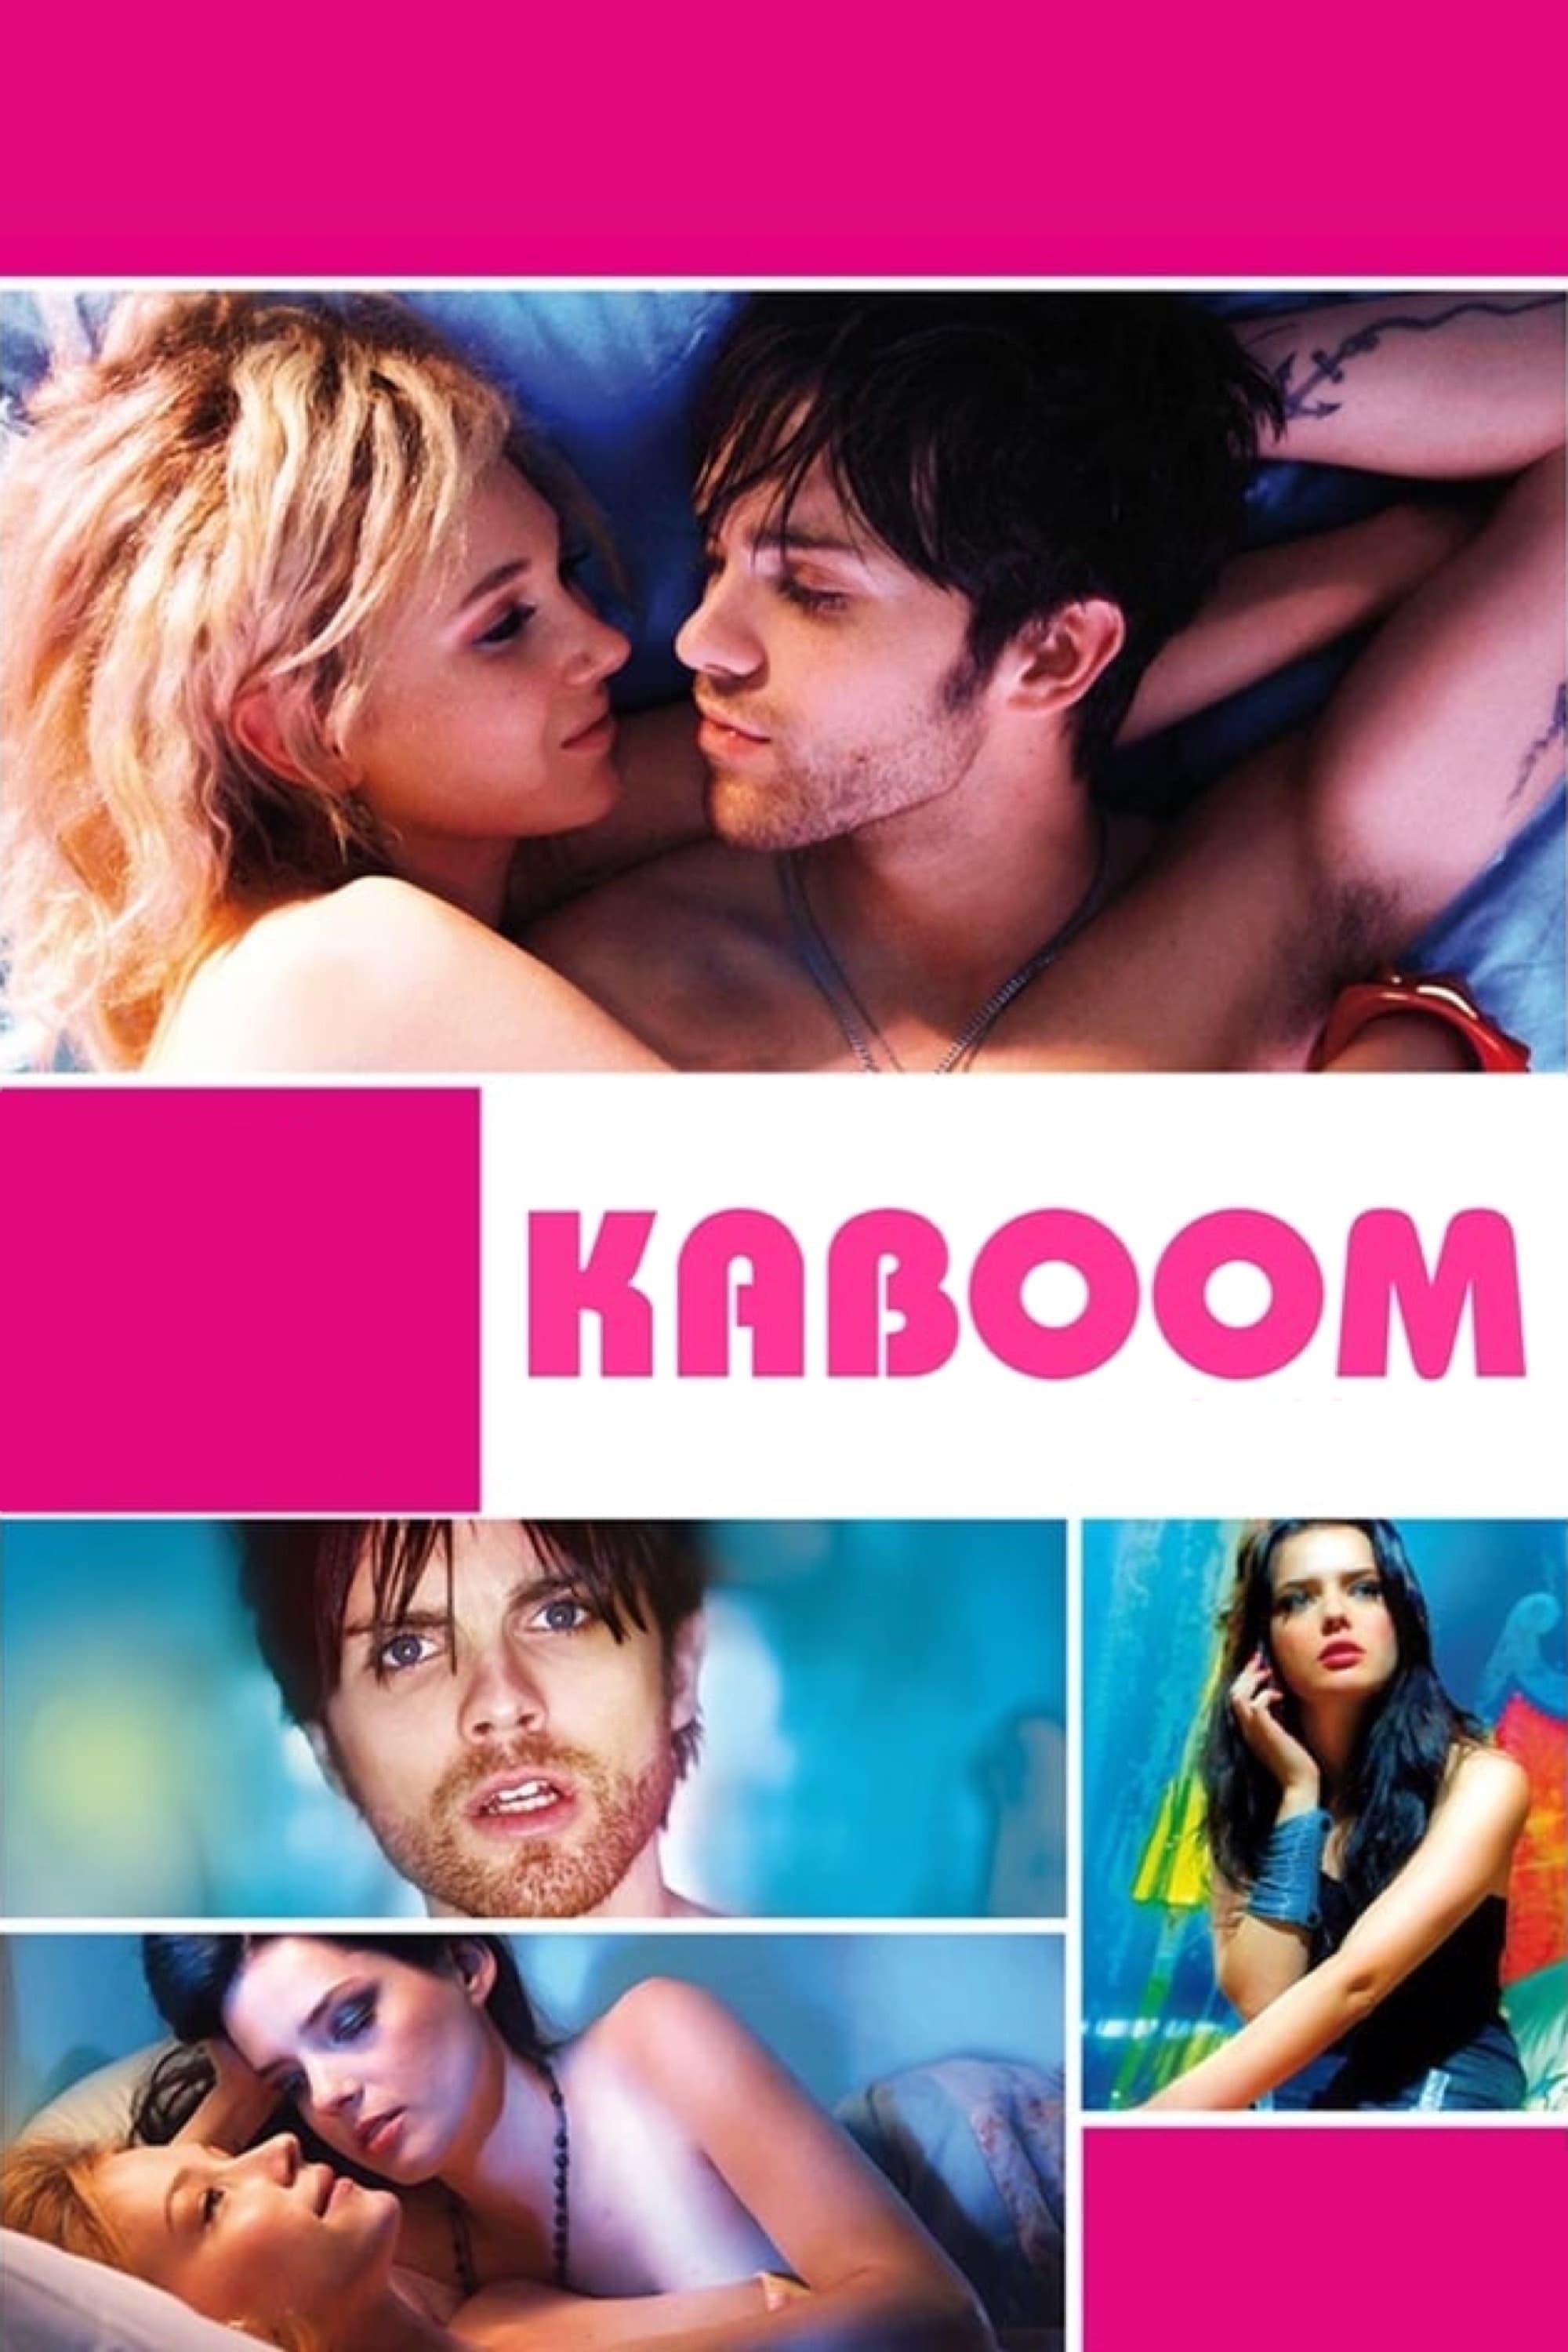 Kaboom poster